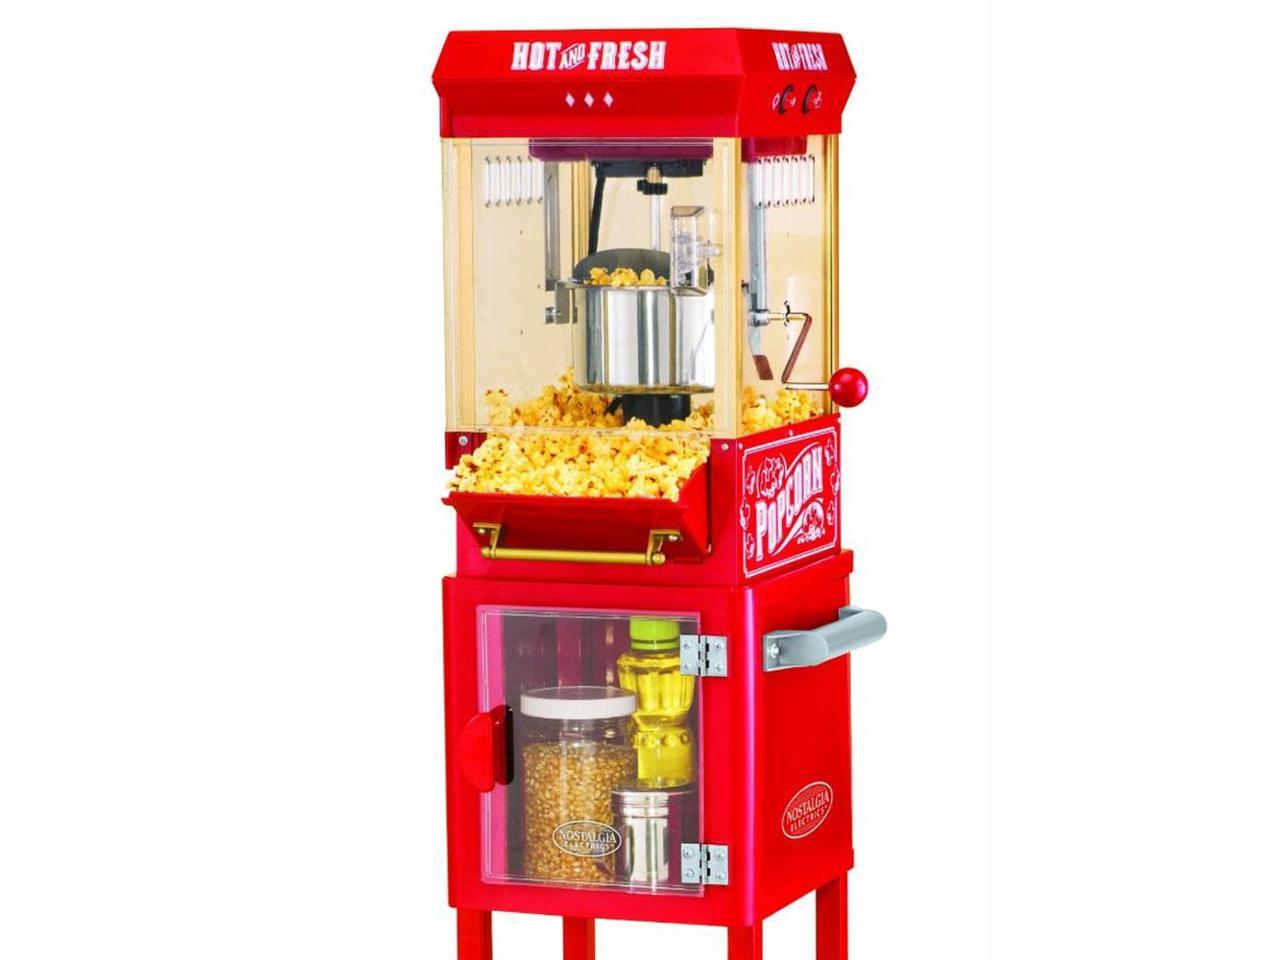 nostalgia popcorn cart